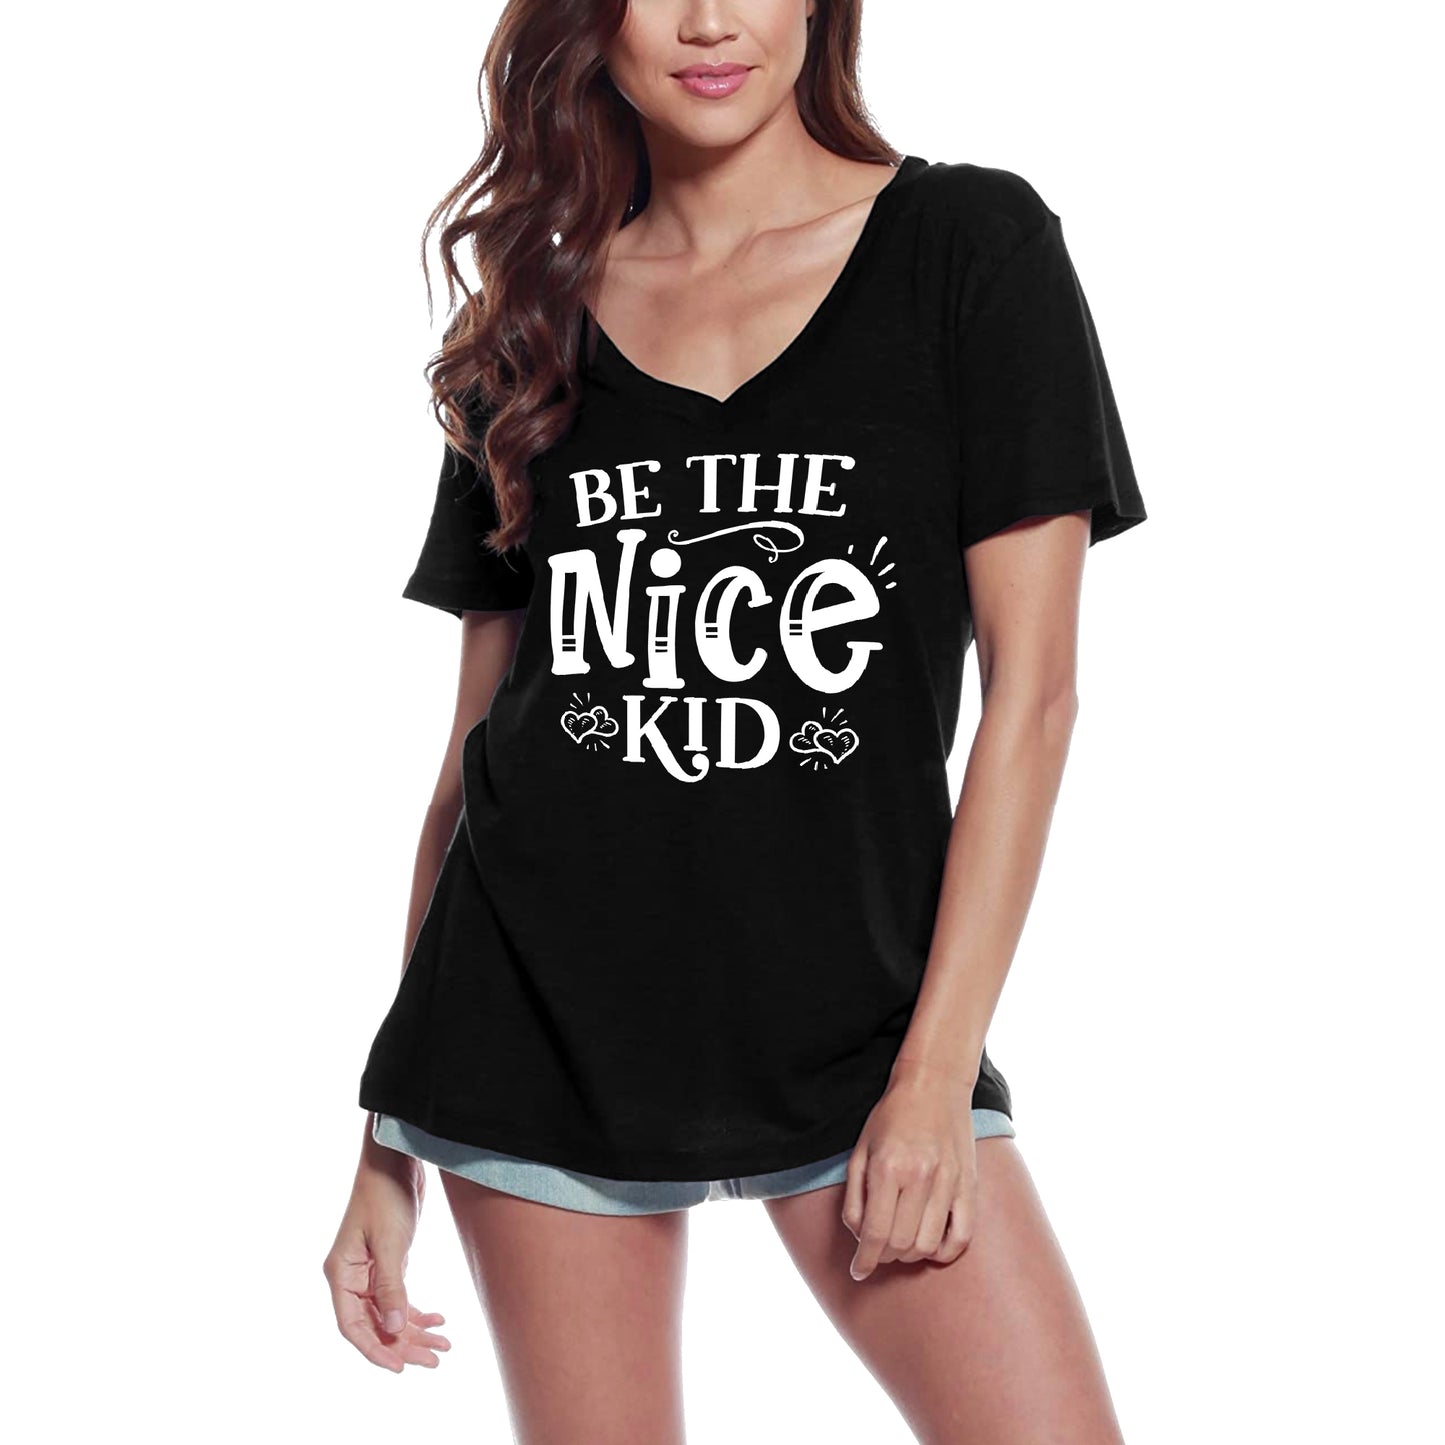 ULTRABASIC Women's T-Shirt Be the Nice Kid - Short Sleeve Tee Shirt Tops